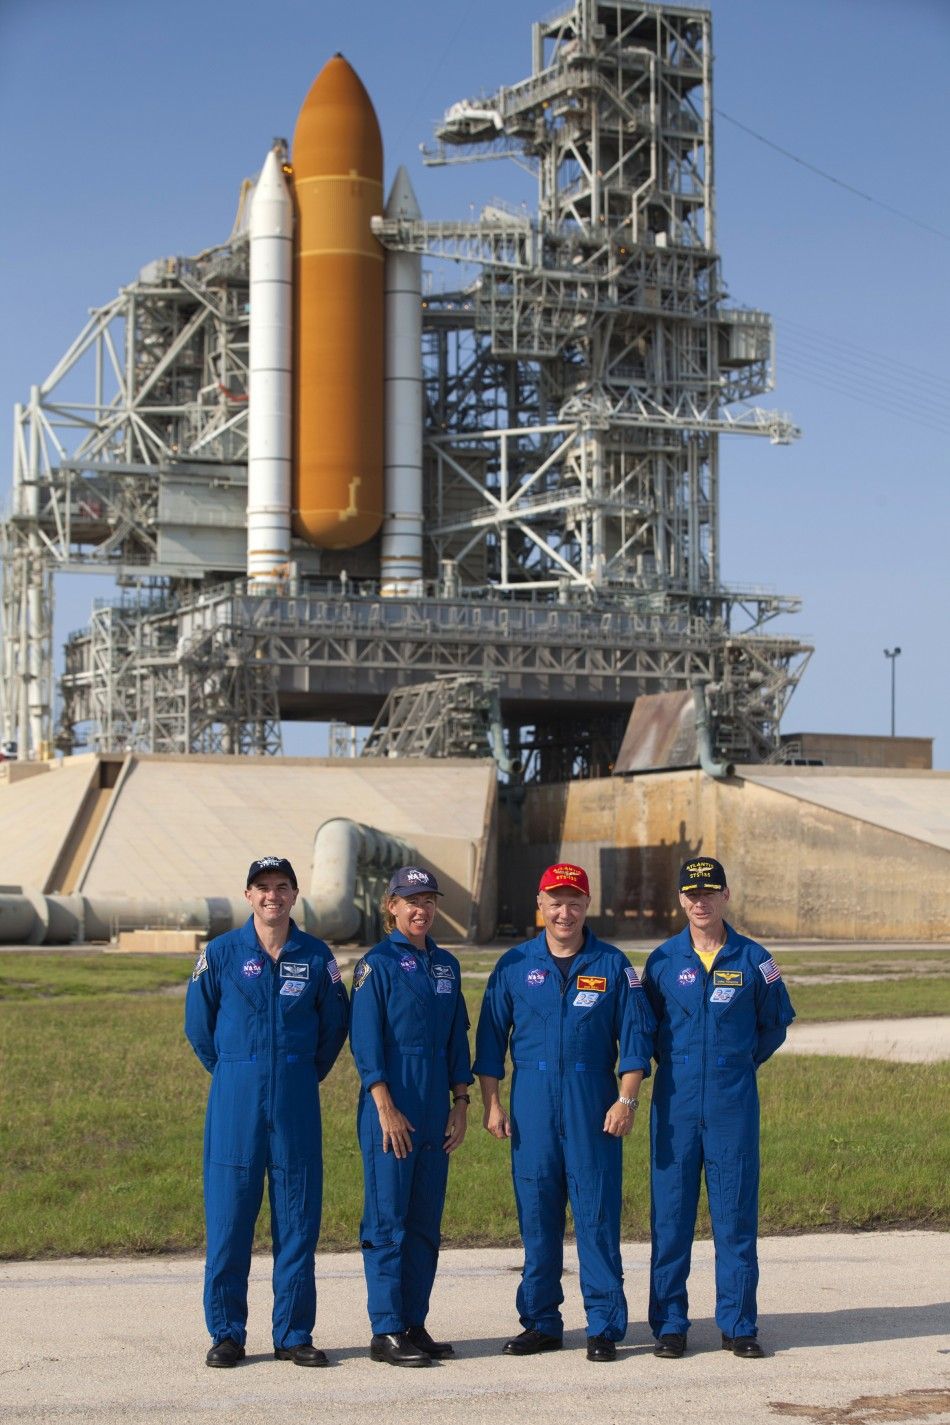 Countdown to Atlantas NASA039s last space shuttle